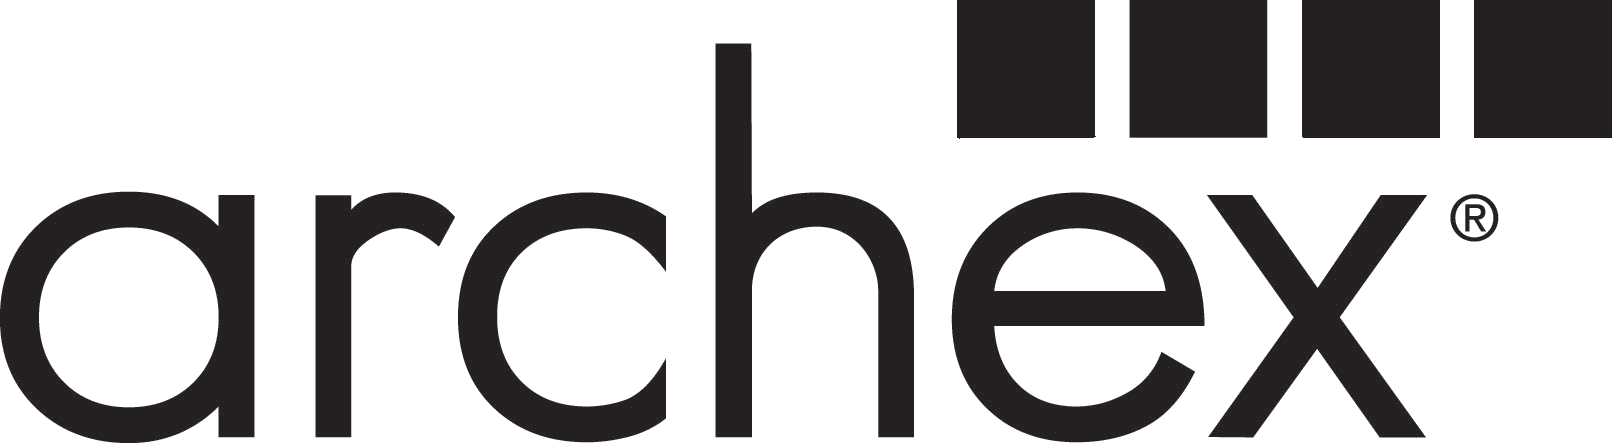 Archex - Logo